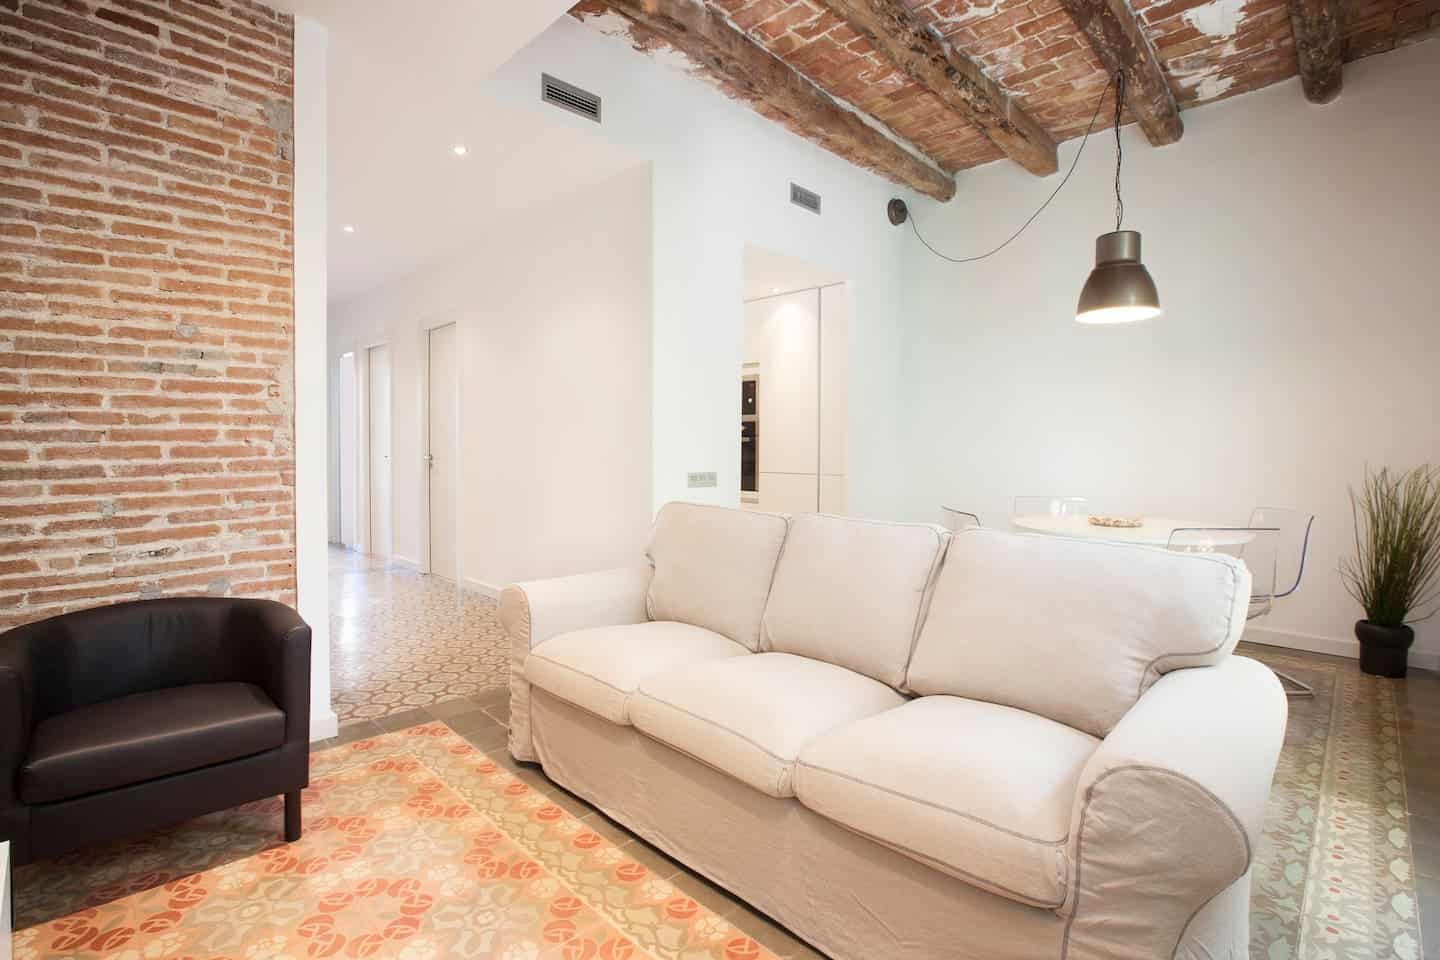 Image of Airbnb rental in Barcelona, Spain